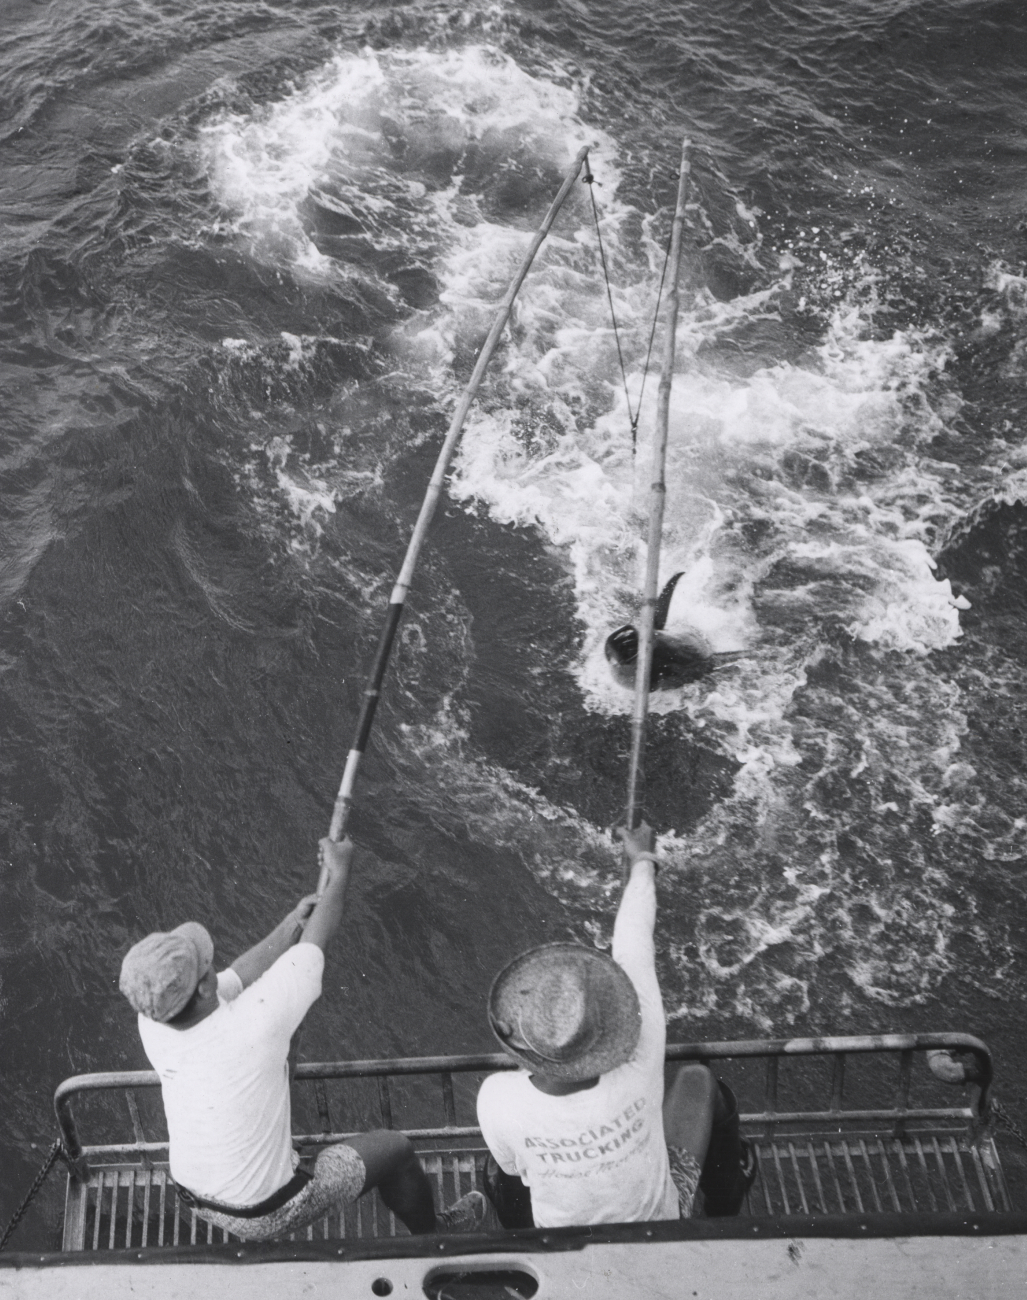 Two-pole method of landing large yellowfin tuna (Thunnus albacares)